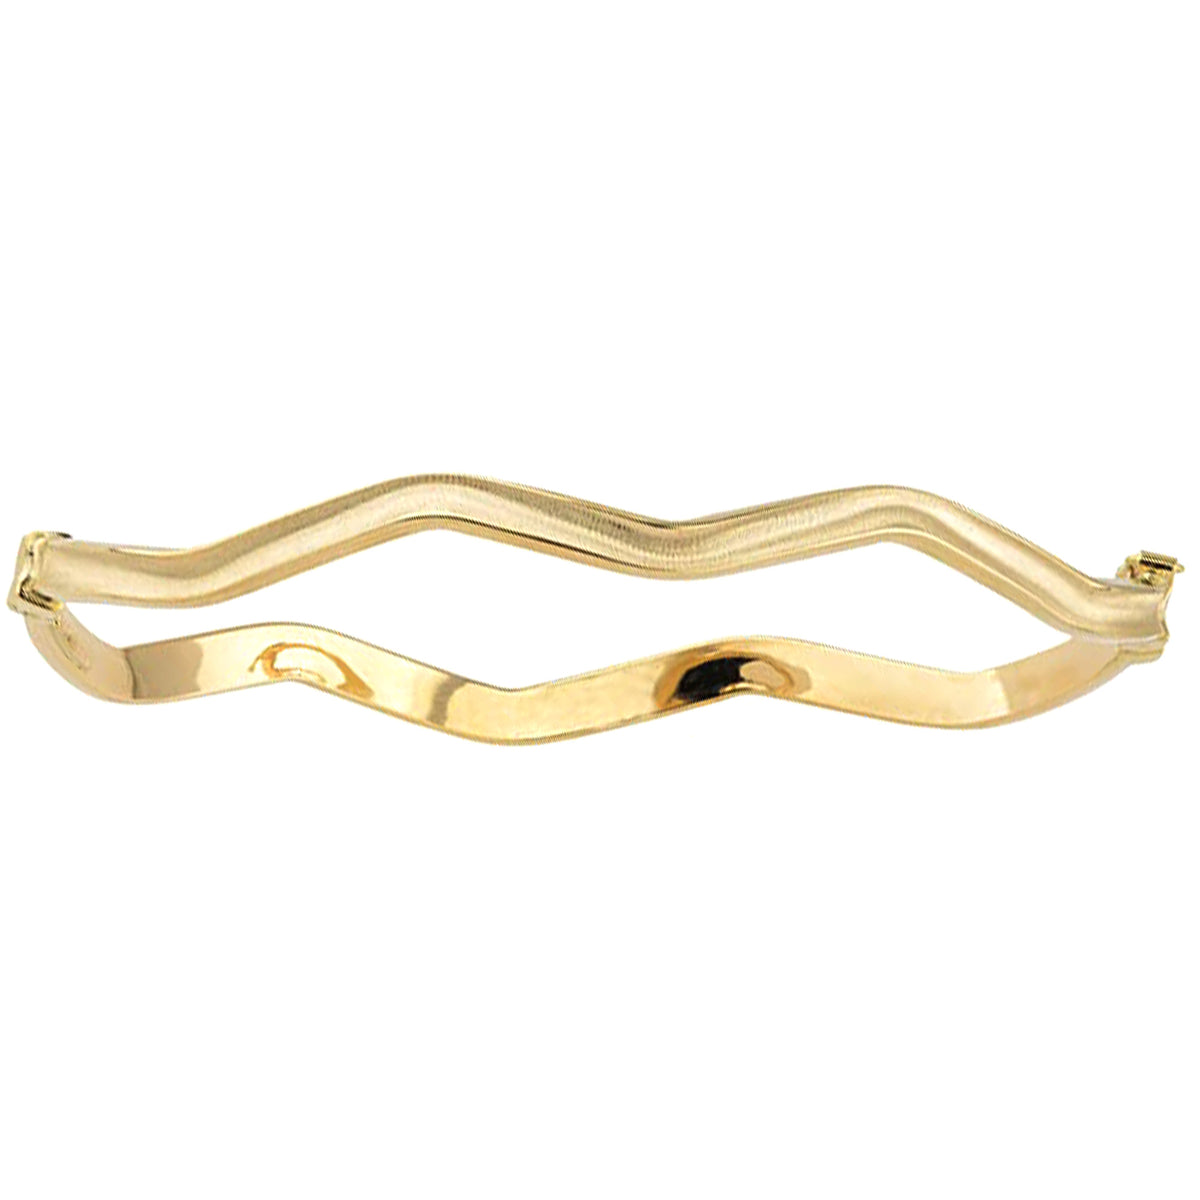 10k Yellow Gold Wave Women's Bangle Bracelet, 7.5" fine designer jewelry for men and women